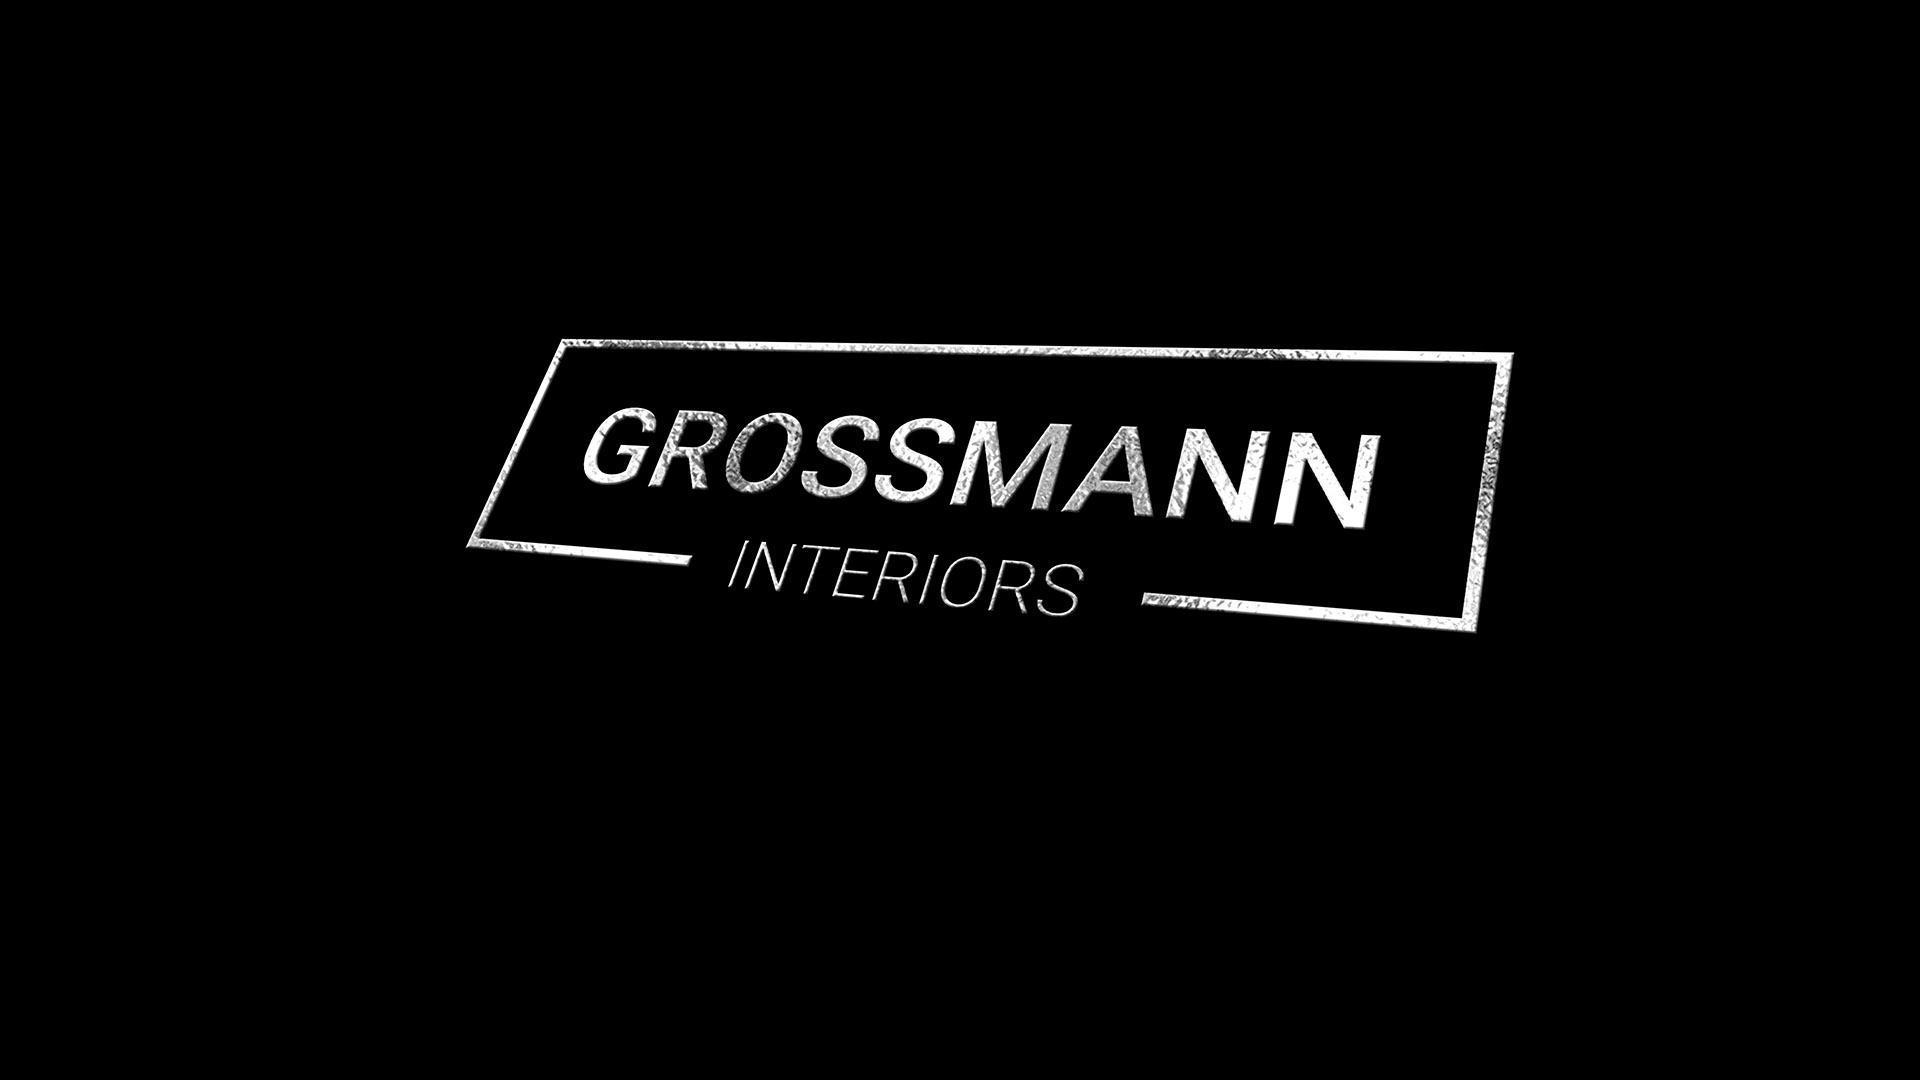 Firmenlogo von GROSSMANN INTERIORS als Ausdruck des Corporate Designs - GROSSMANN INTERIORS